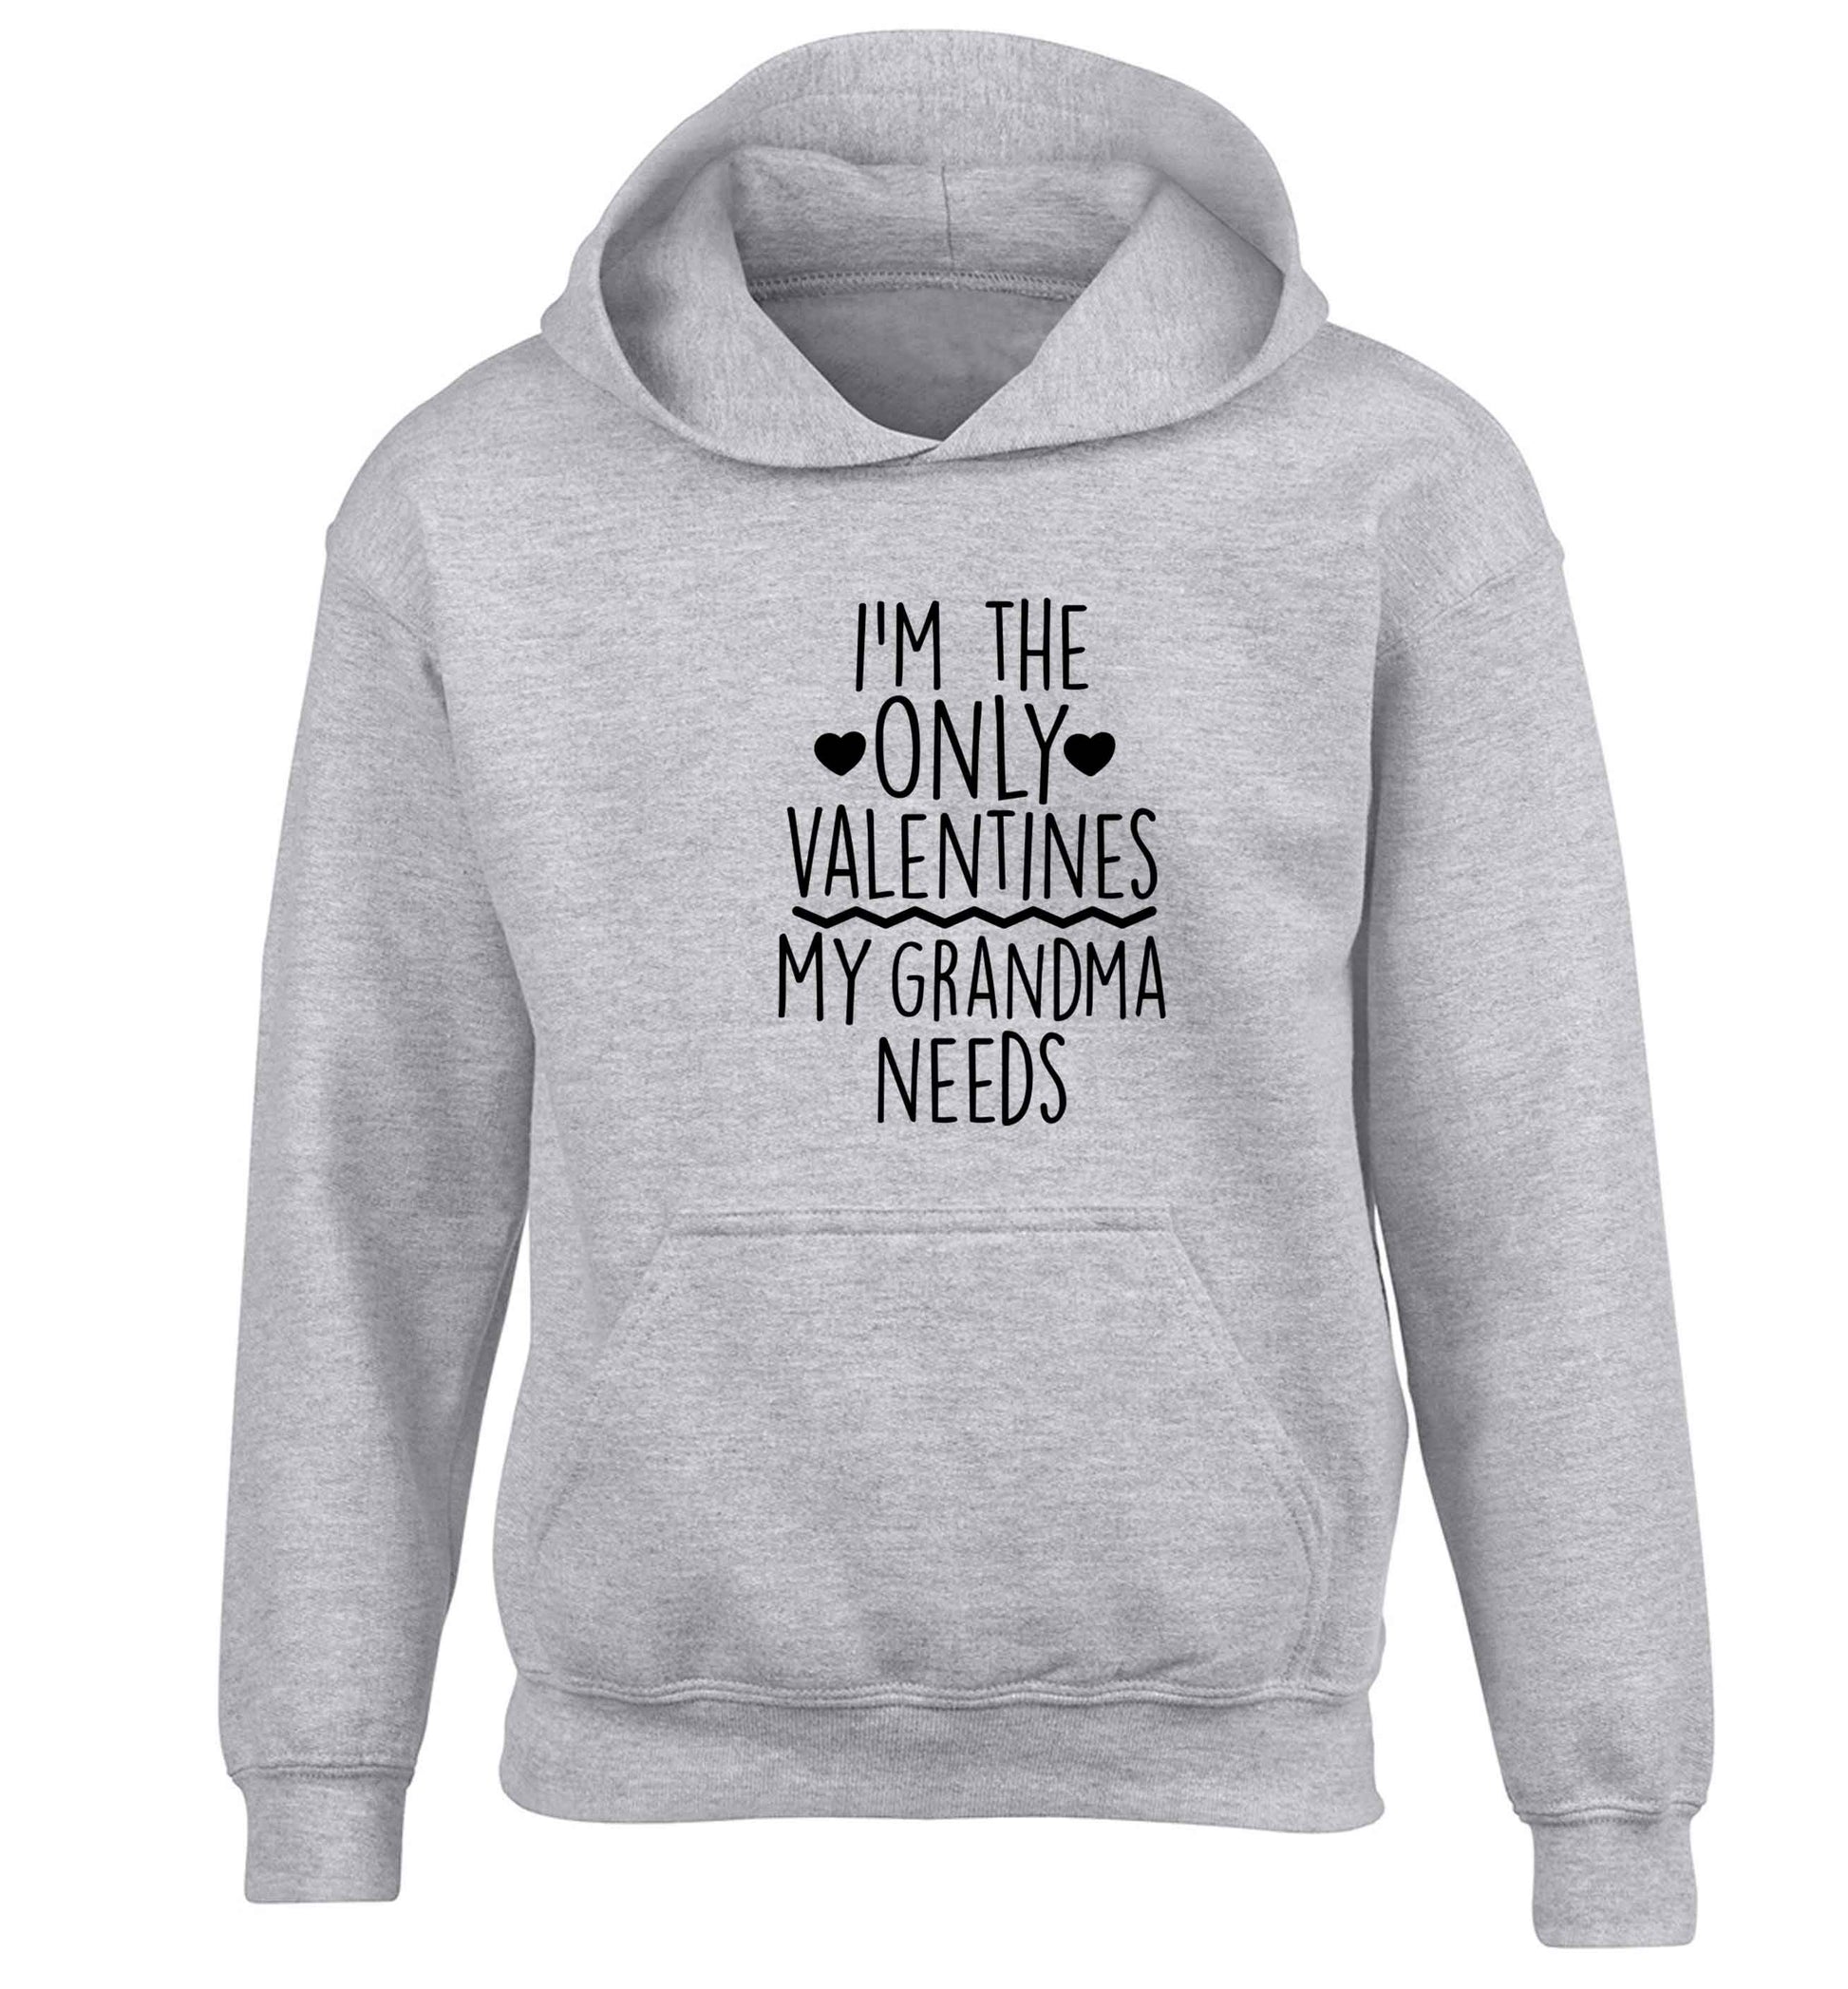 I'm the only valentines my grandma needs children's grey hoodie 12-13 Years